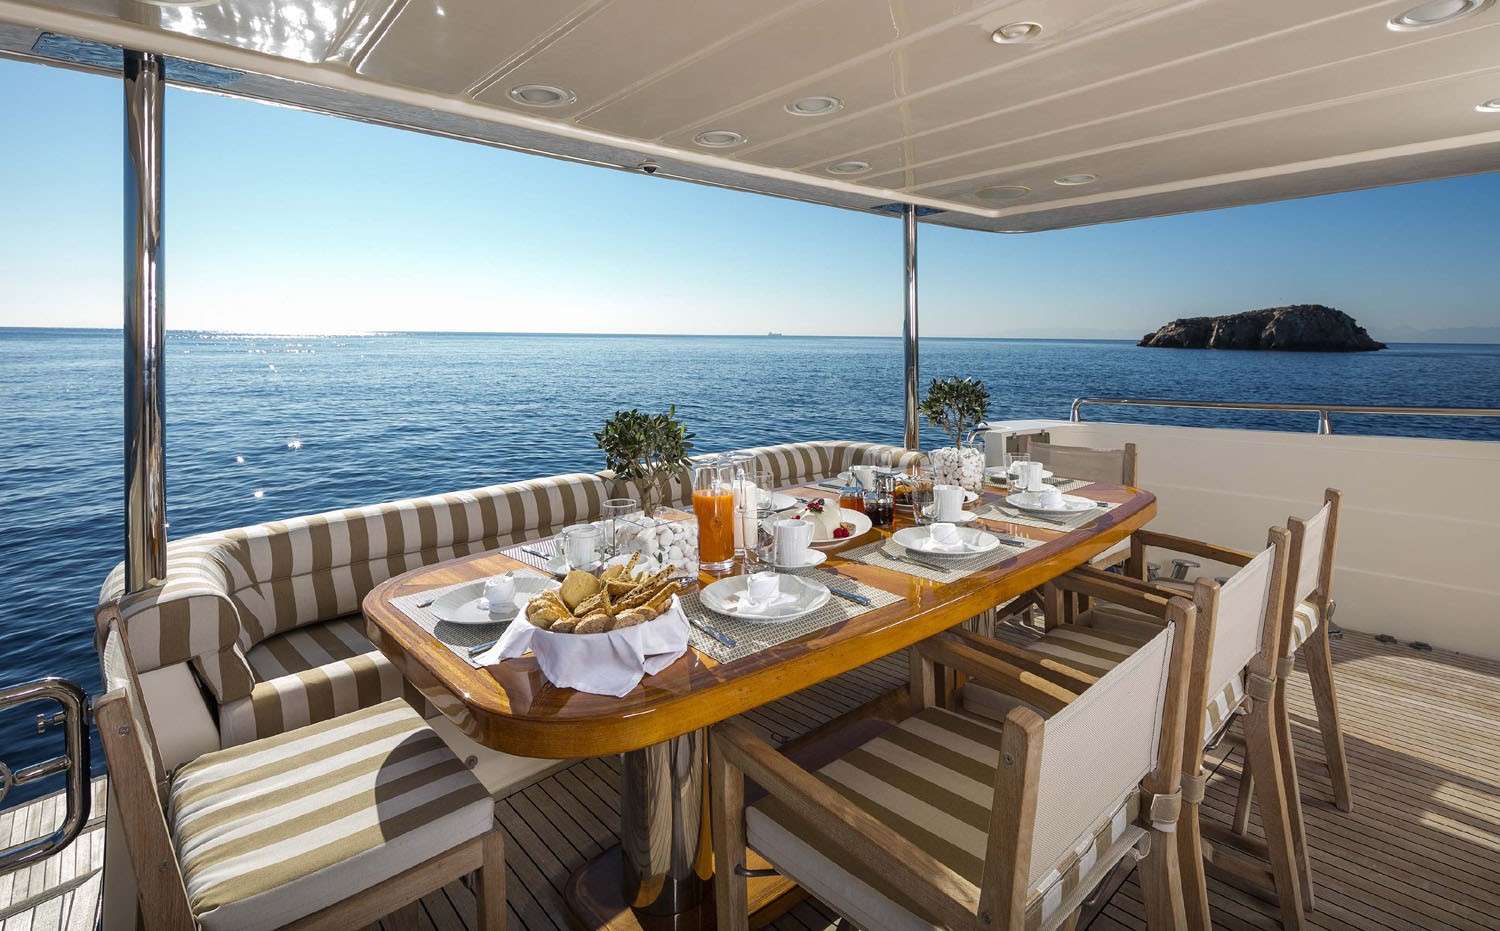 MYTHOS G - Superyacht charter worldwide & Boat hire in Greece 5